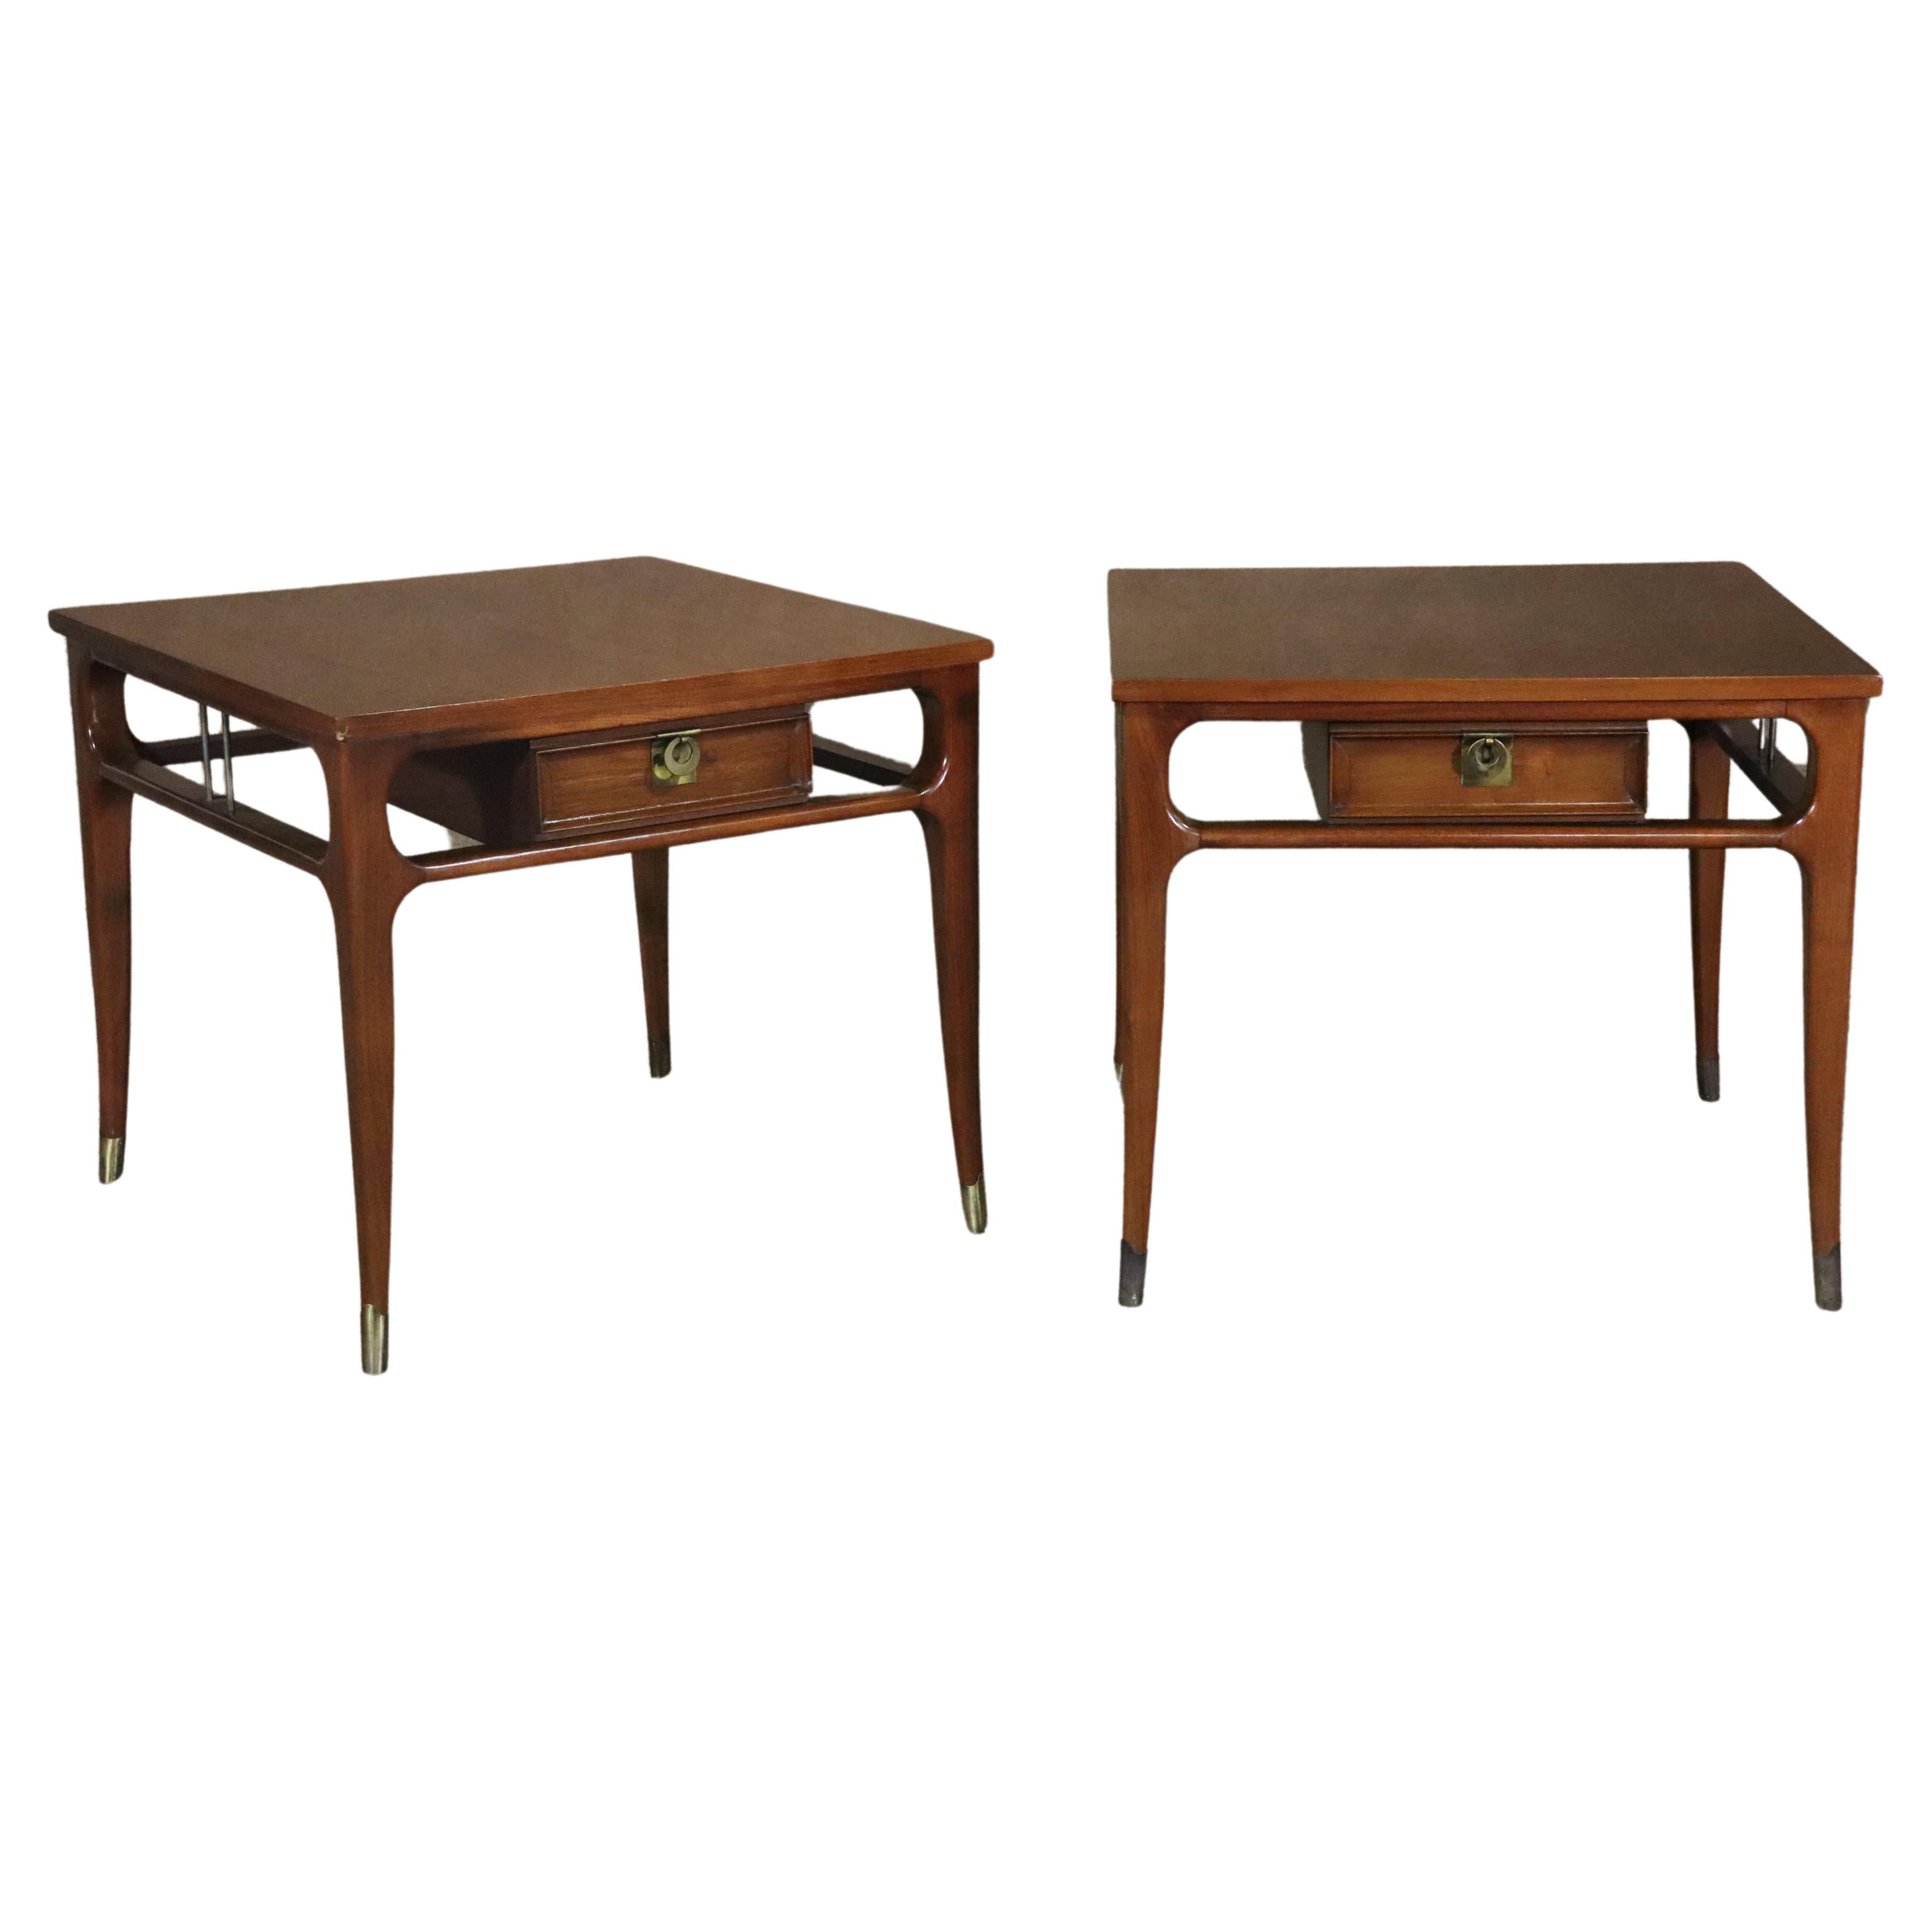 'Tiara' Series Tables by White Furniture